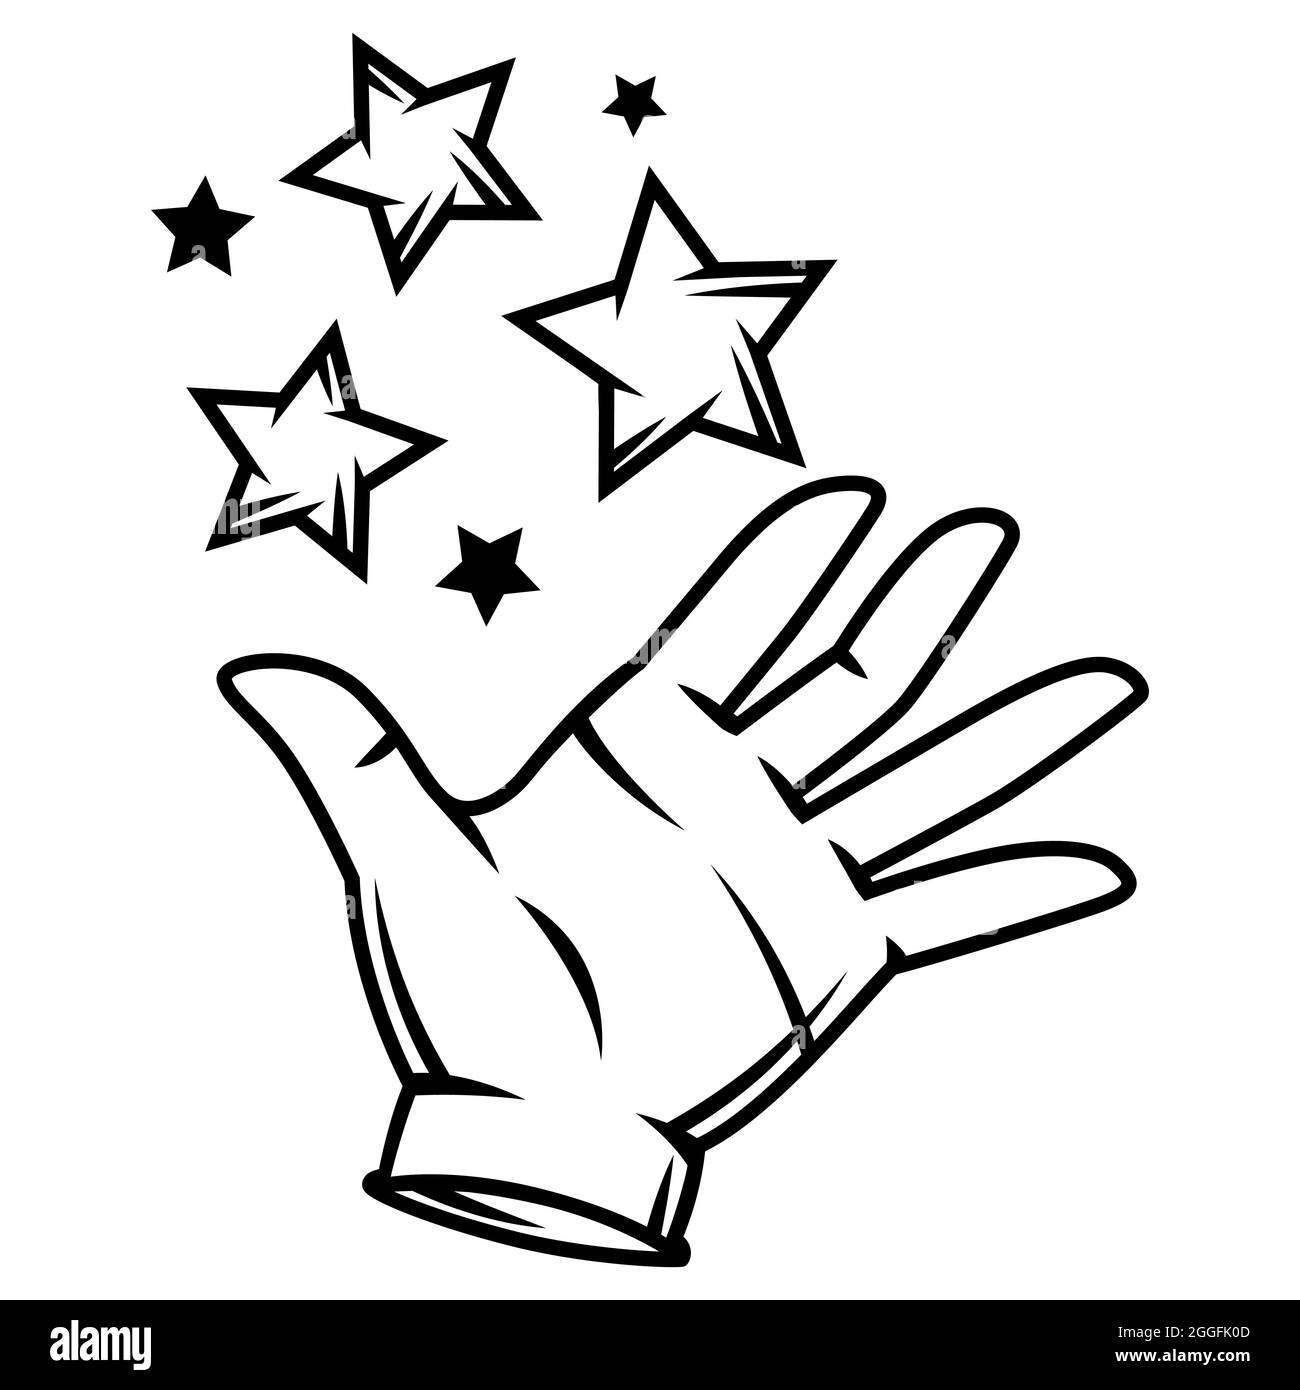 https://c8.alamy.com/comp/2GGFK0D/magician-hand-in-white-glove-trick-or-magic-illustration-2GGFK0D.jpg